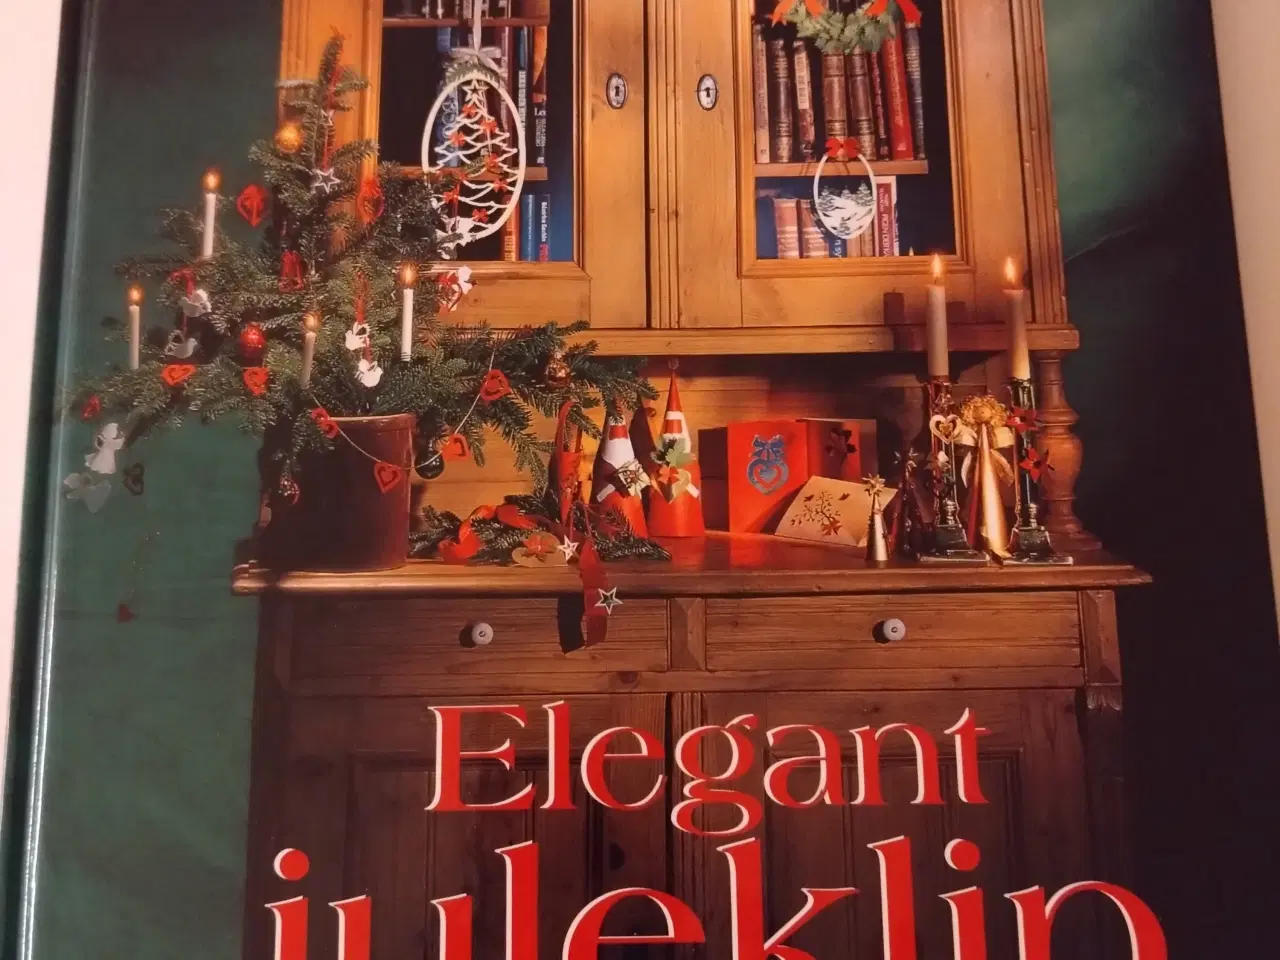 Billede 1 - bog "elegant juleklip" Gitte Schou Hansen